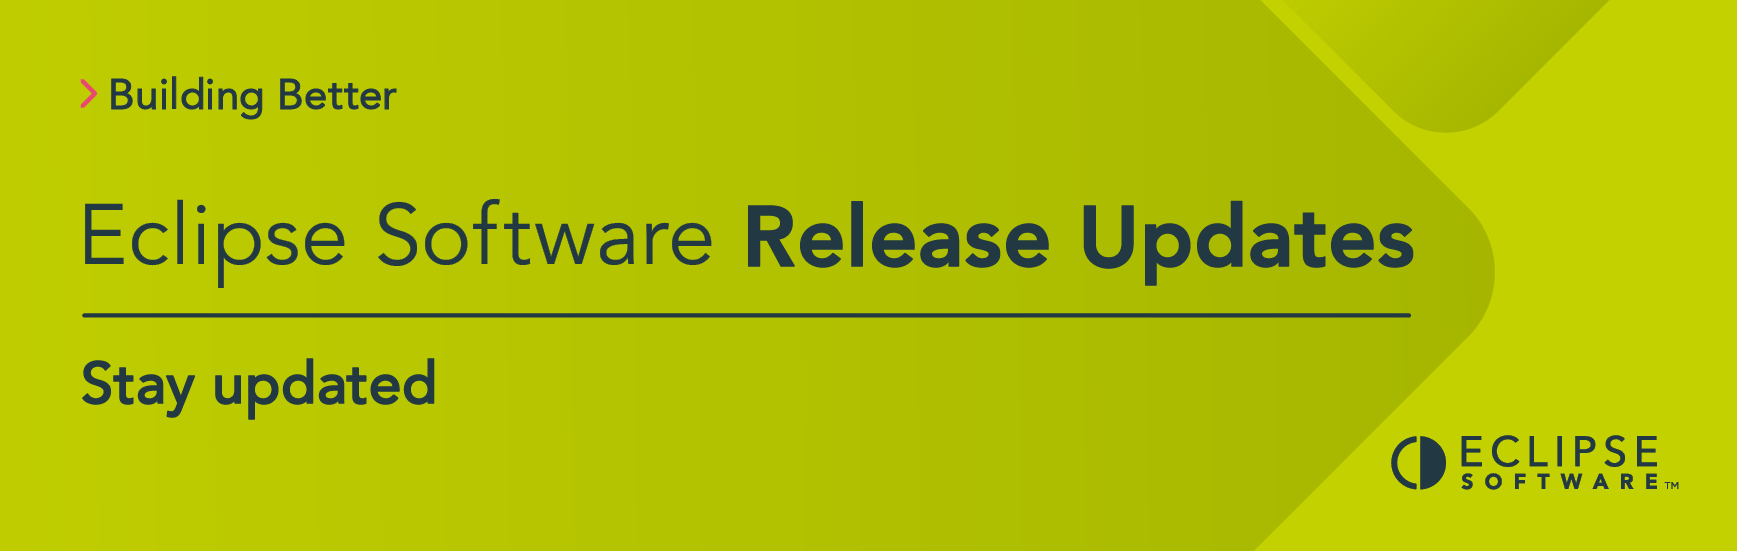 Software Release Updates Banner